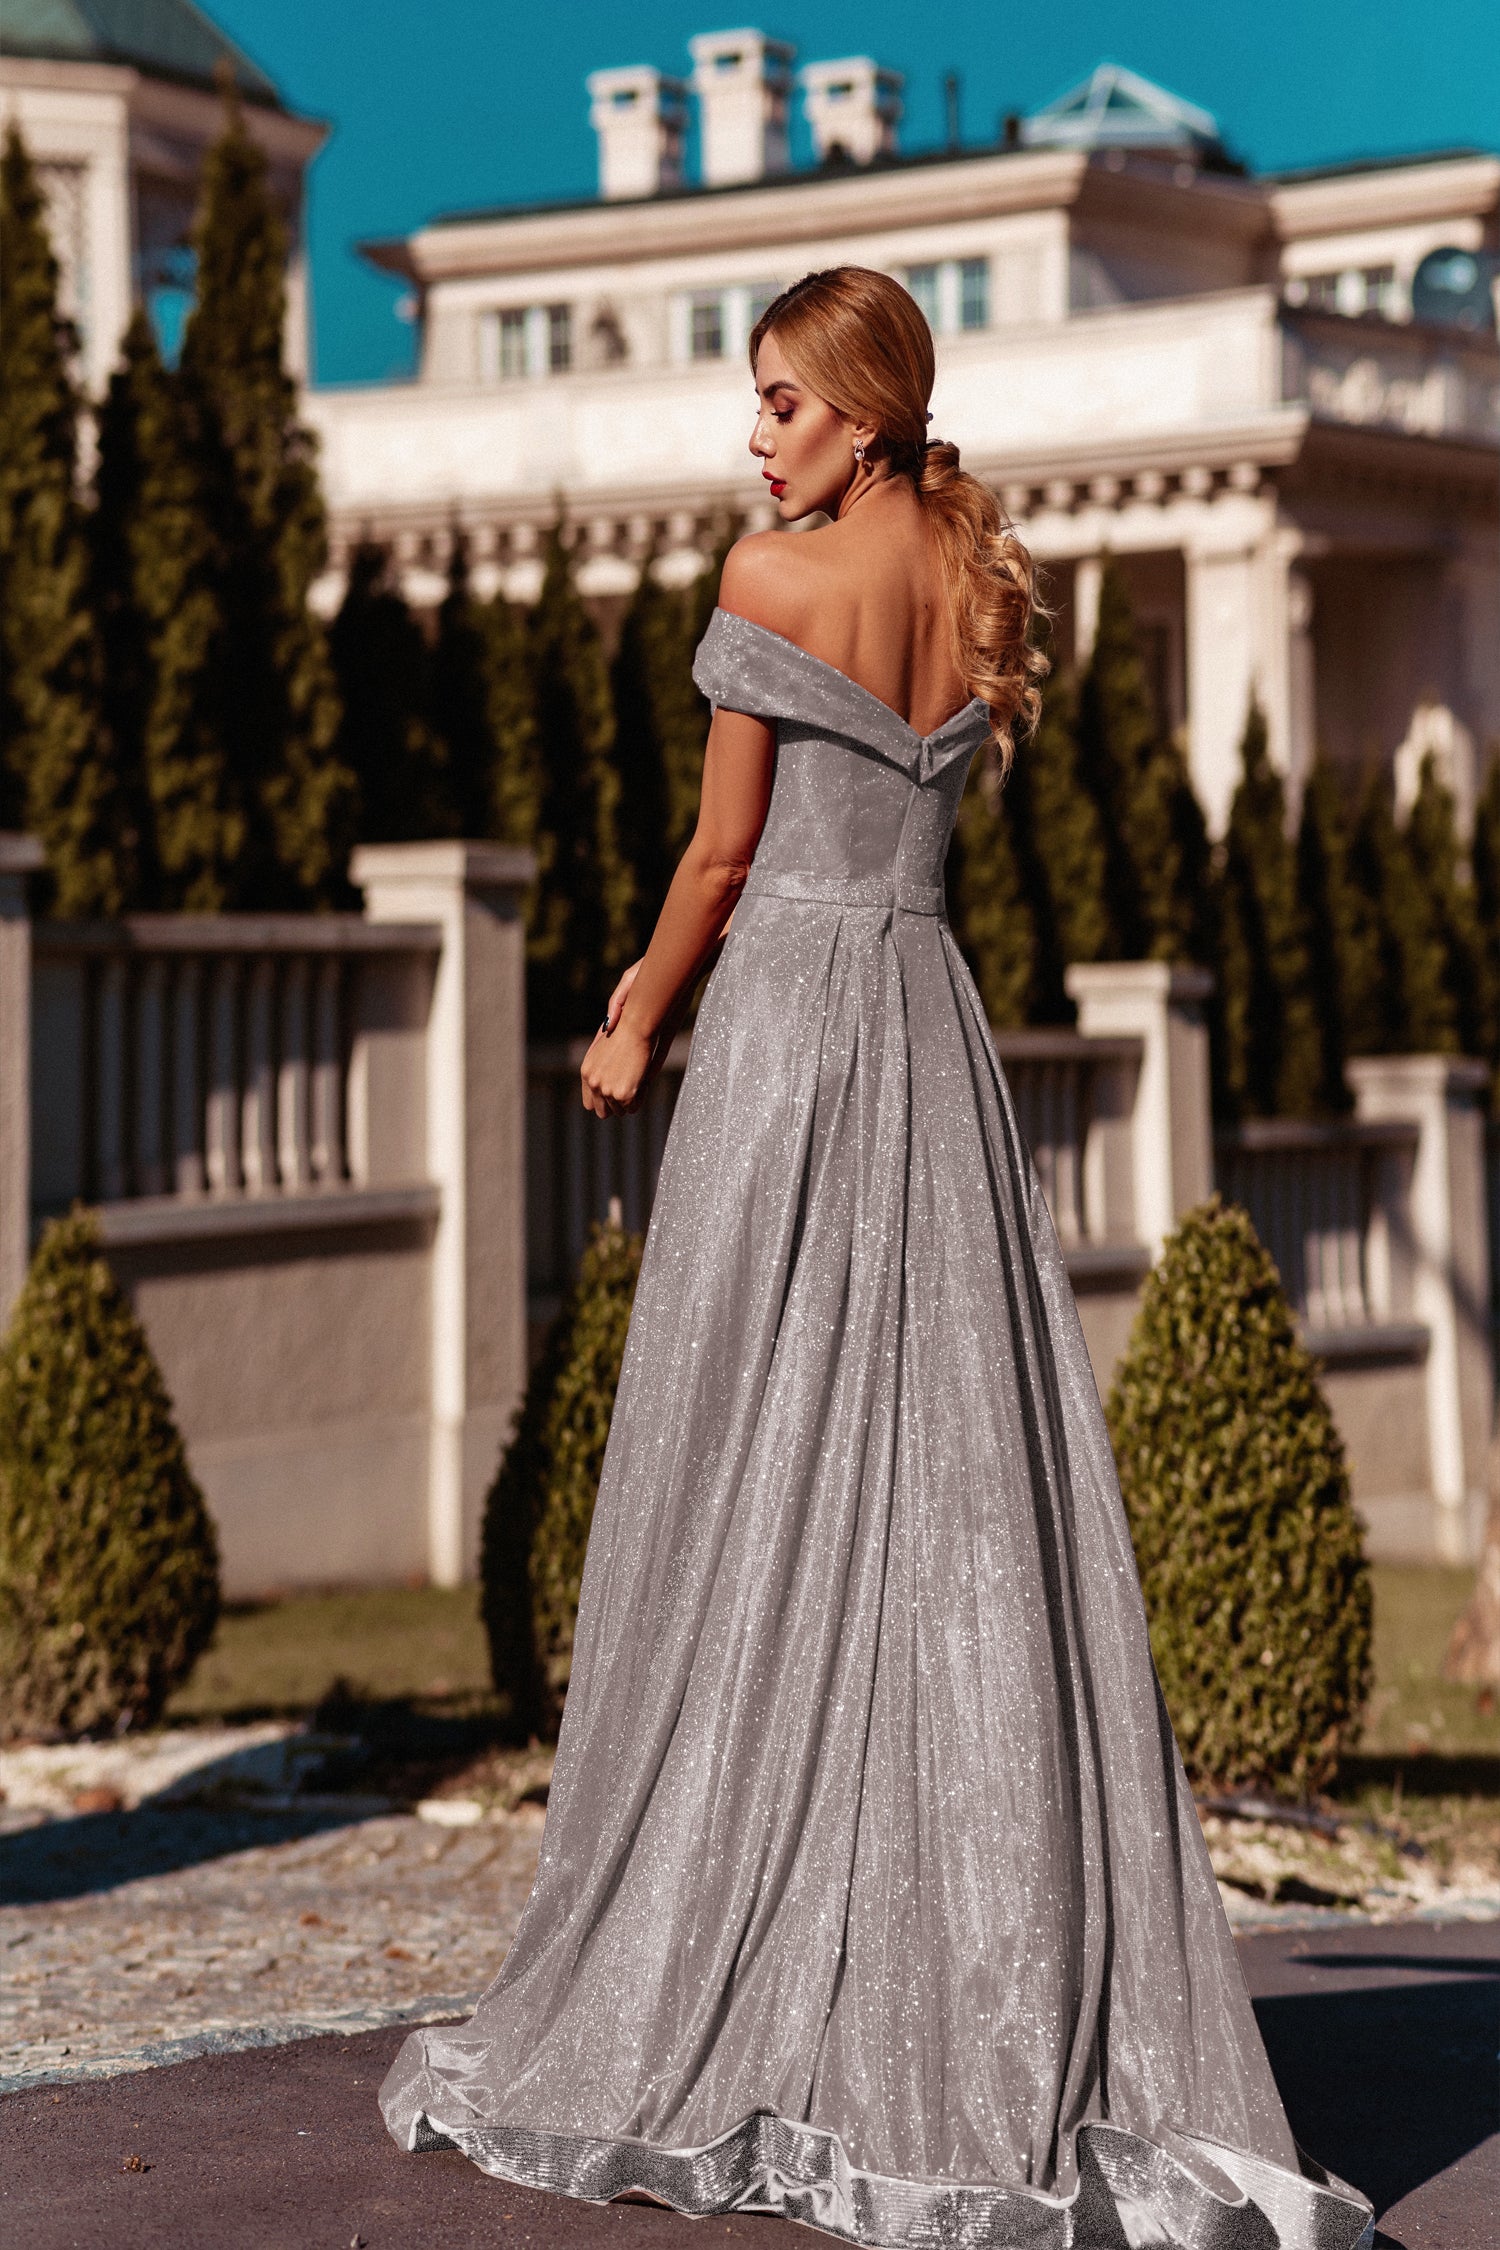 Tina Holly Couture Designer TW028 White Musk Glitter Formal Dress w Over Skirt